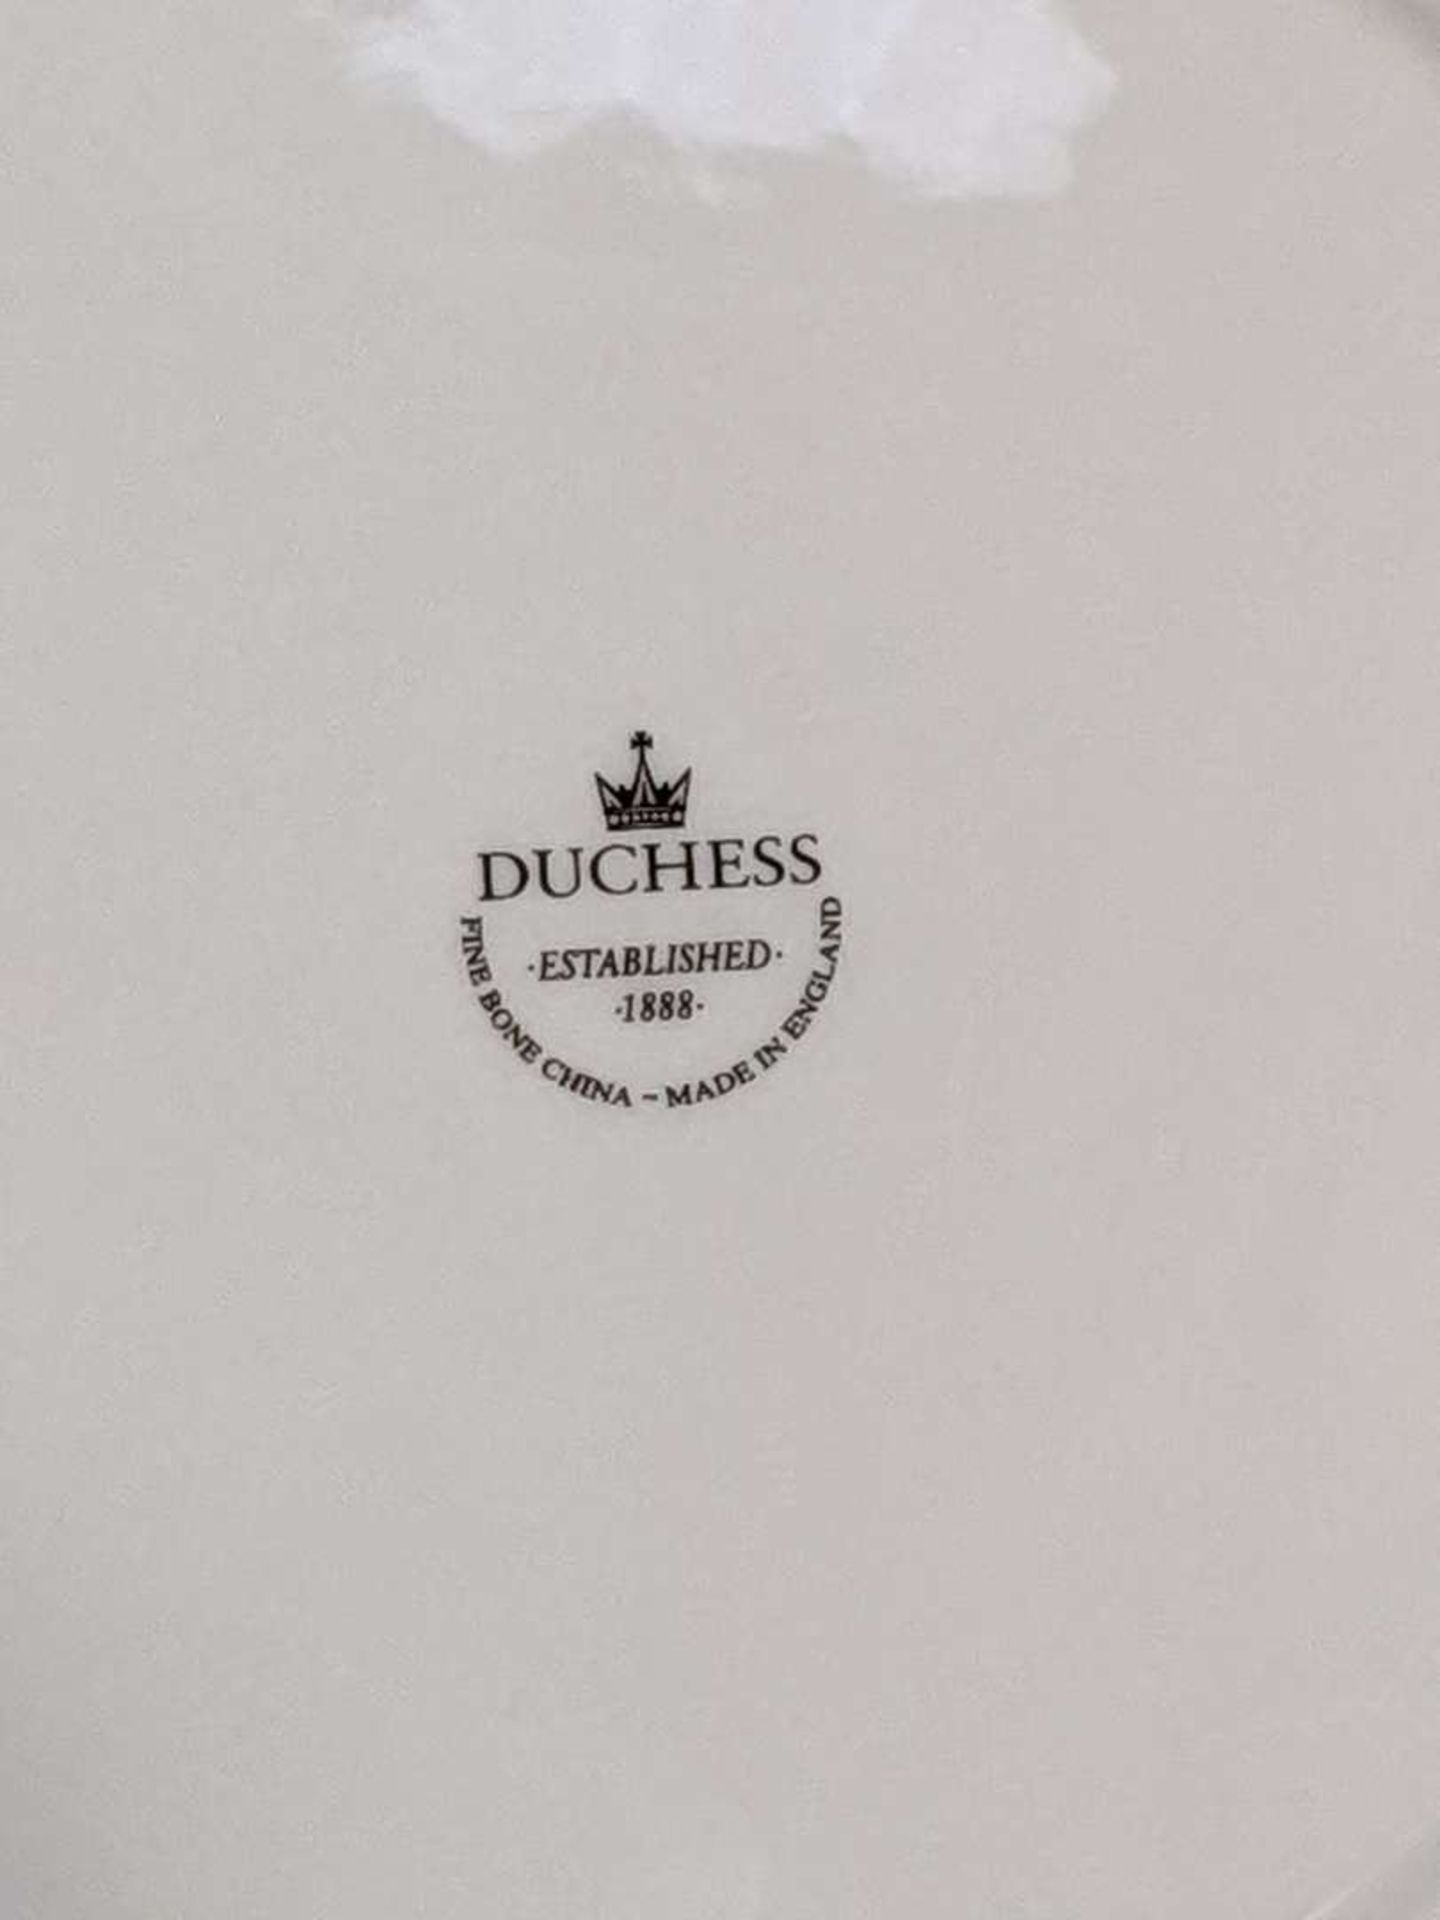 DUCHESS Dessert Plate - Image 2 of 2